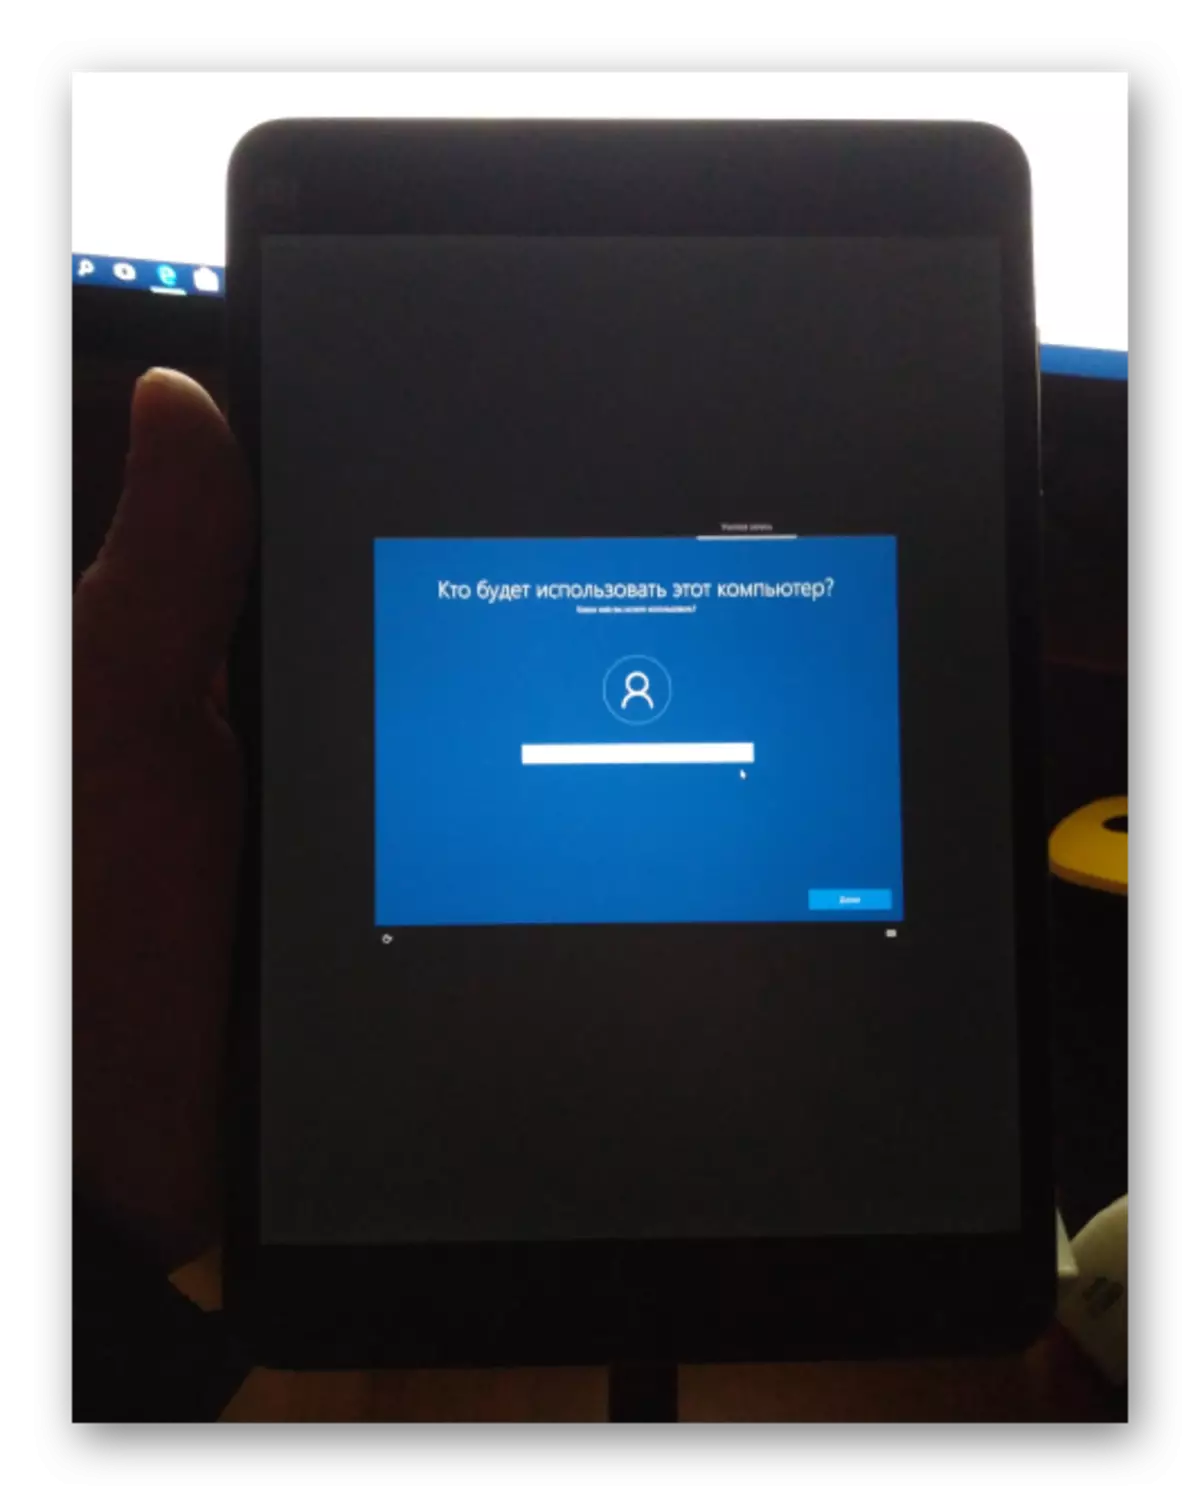 Xiaomi MiPad 2 - Defining the basic parameters of Windows 10